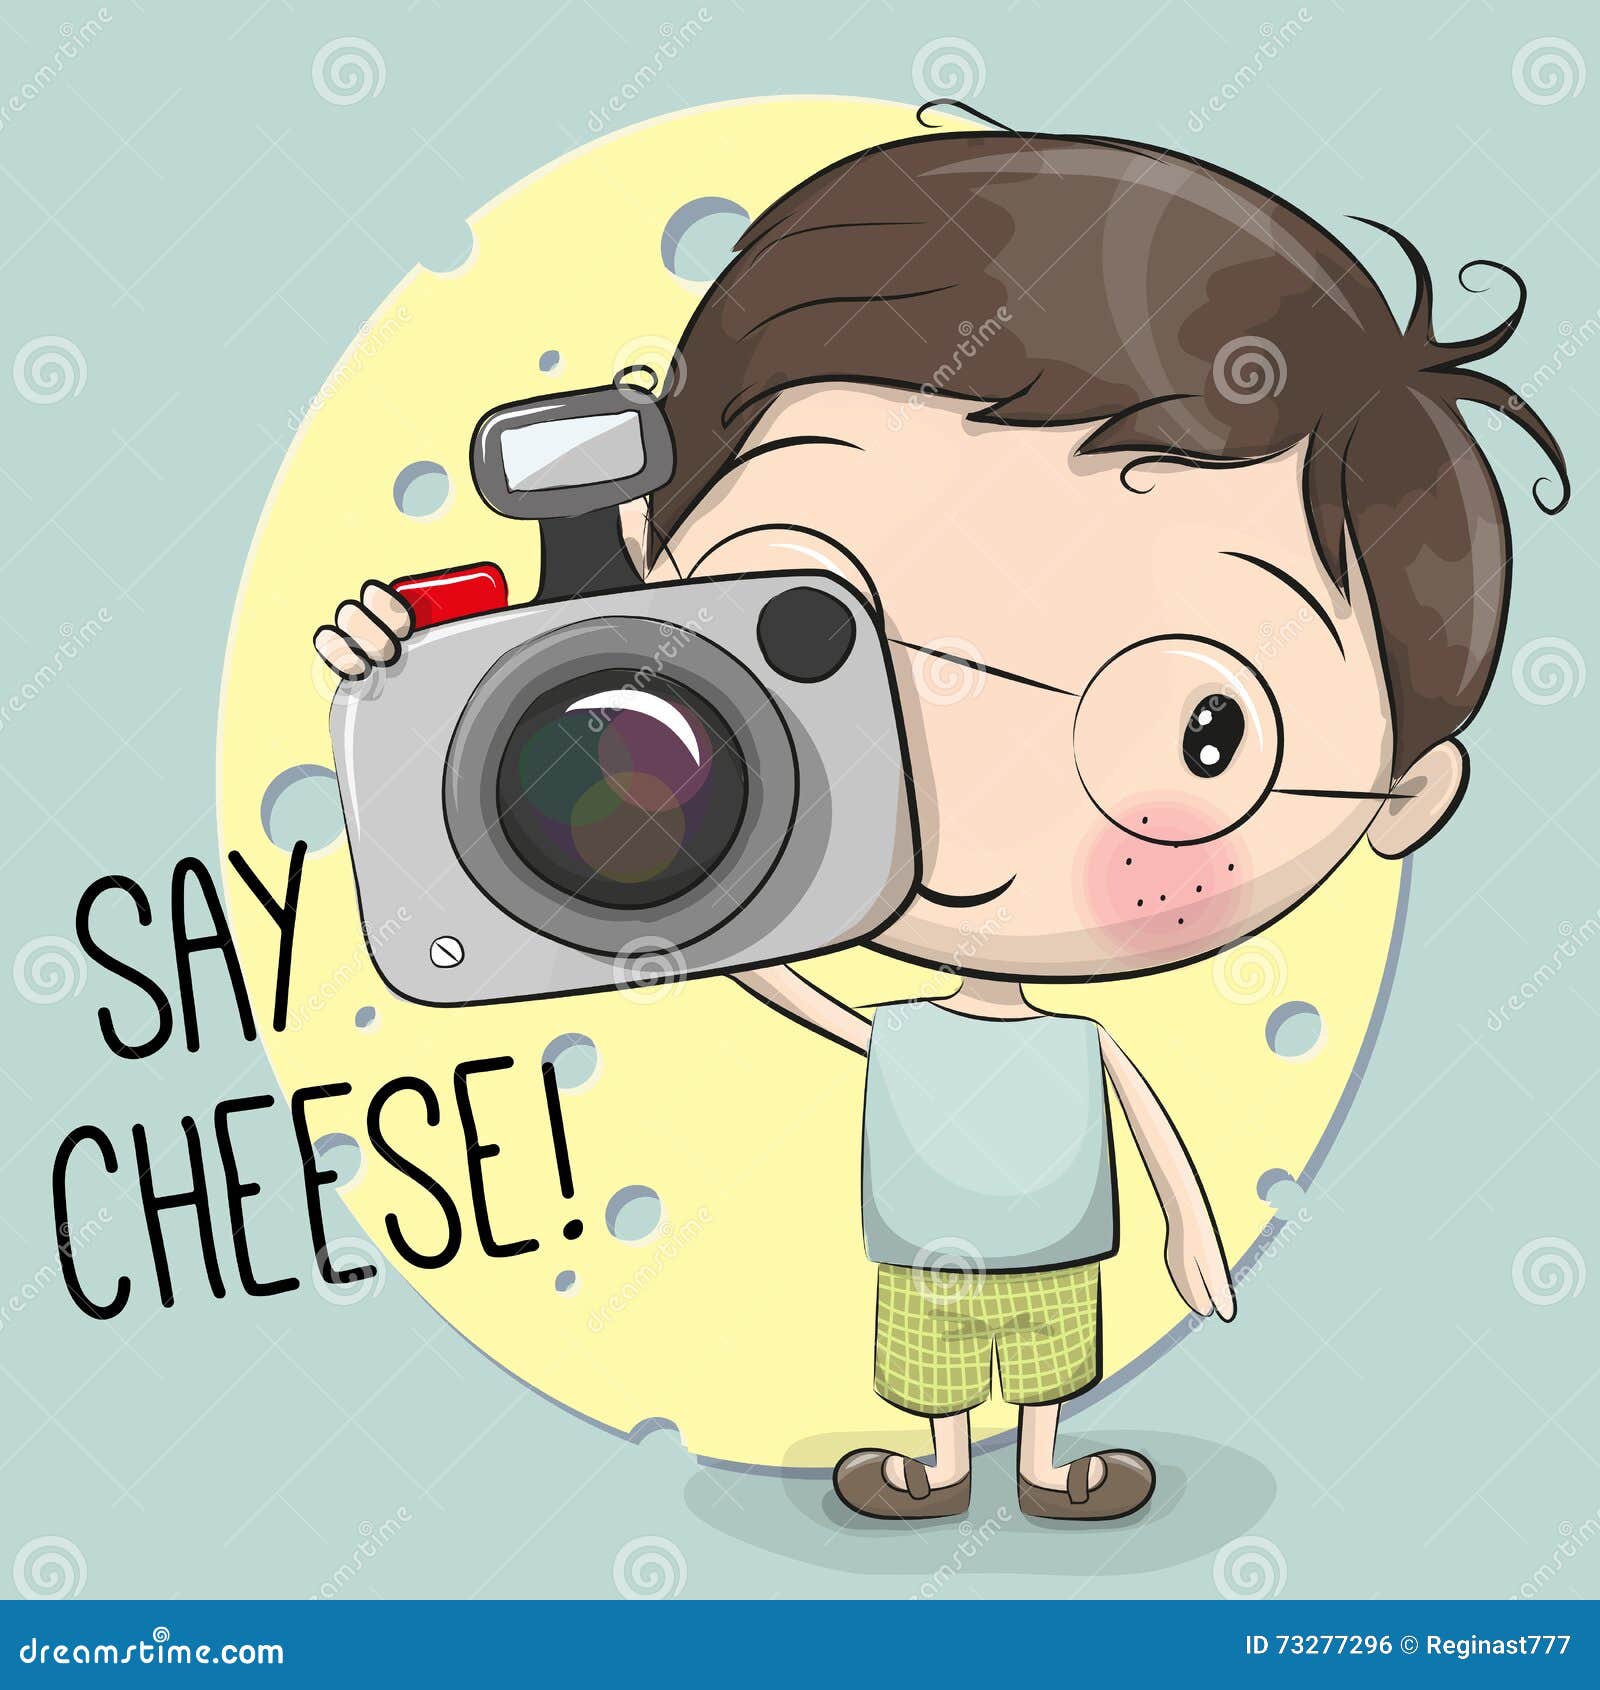 Cute Cartoon Boy With A Camera Vector Illustration | CartoonDealer.com ...